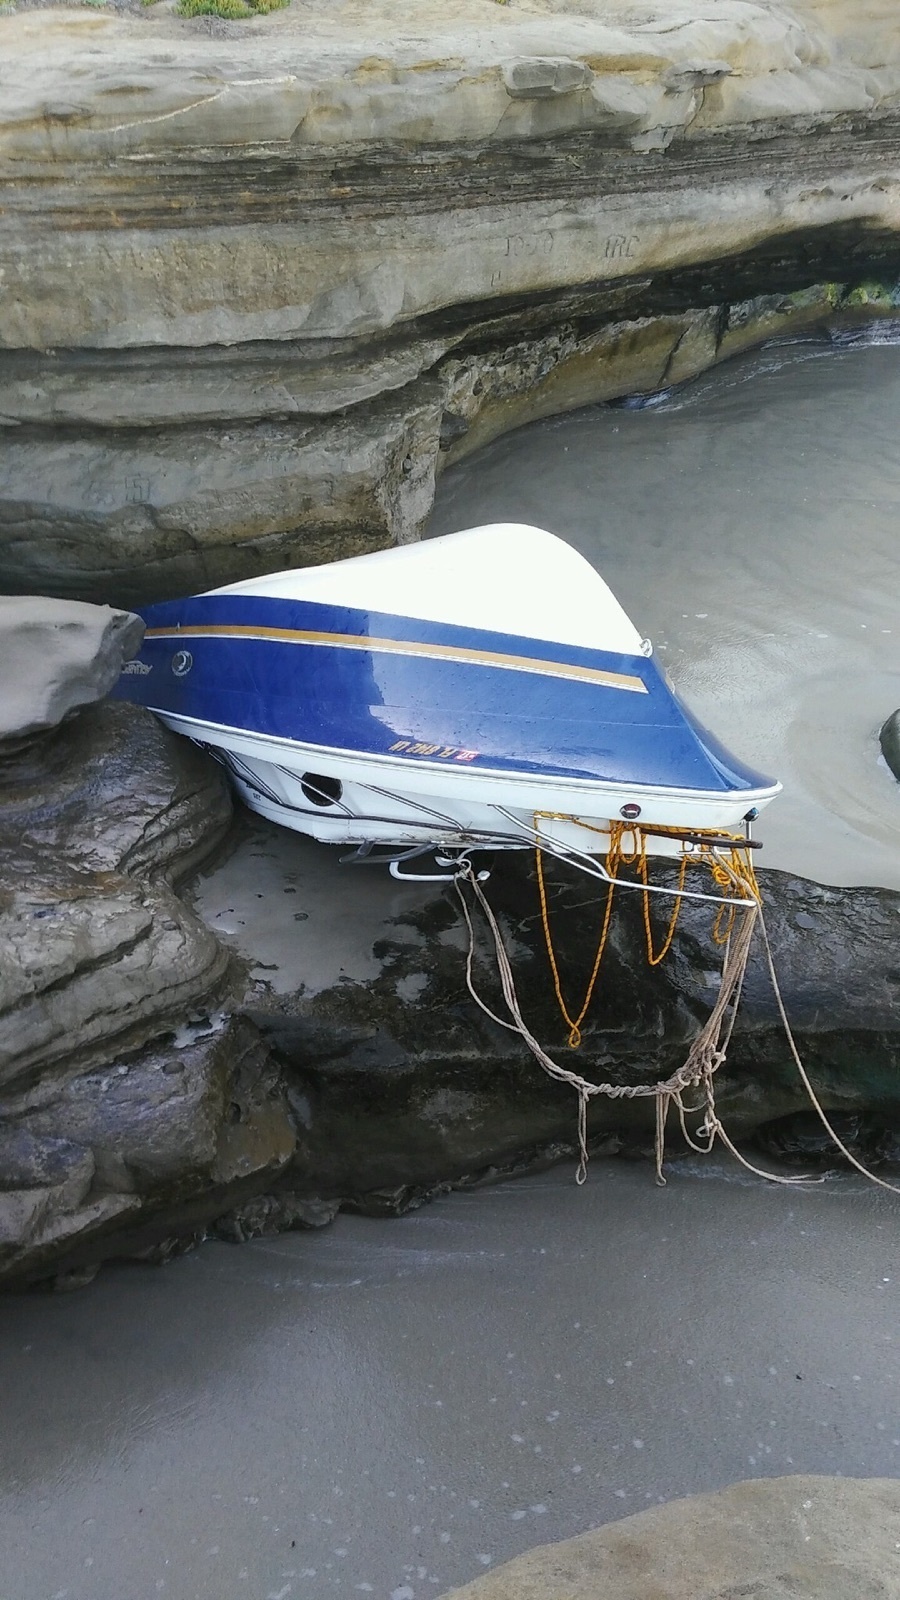 Capsized vessel at Windansea Beach